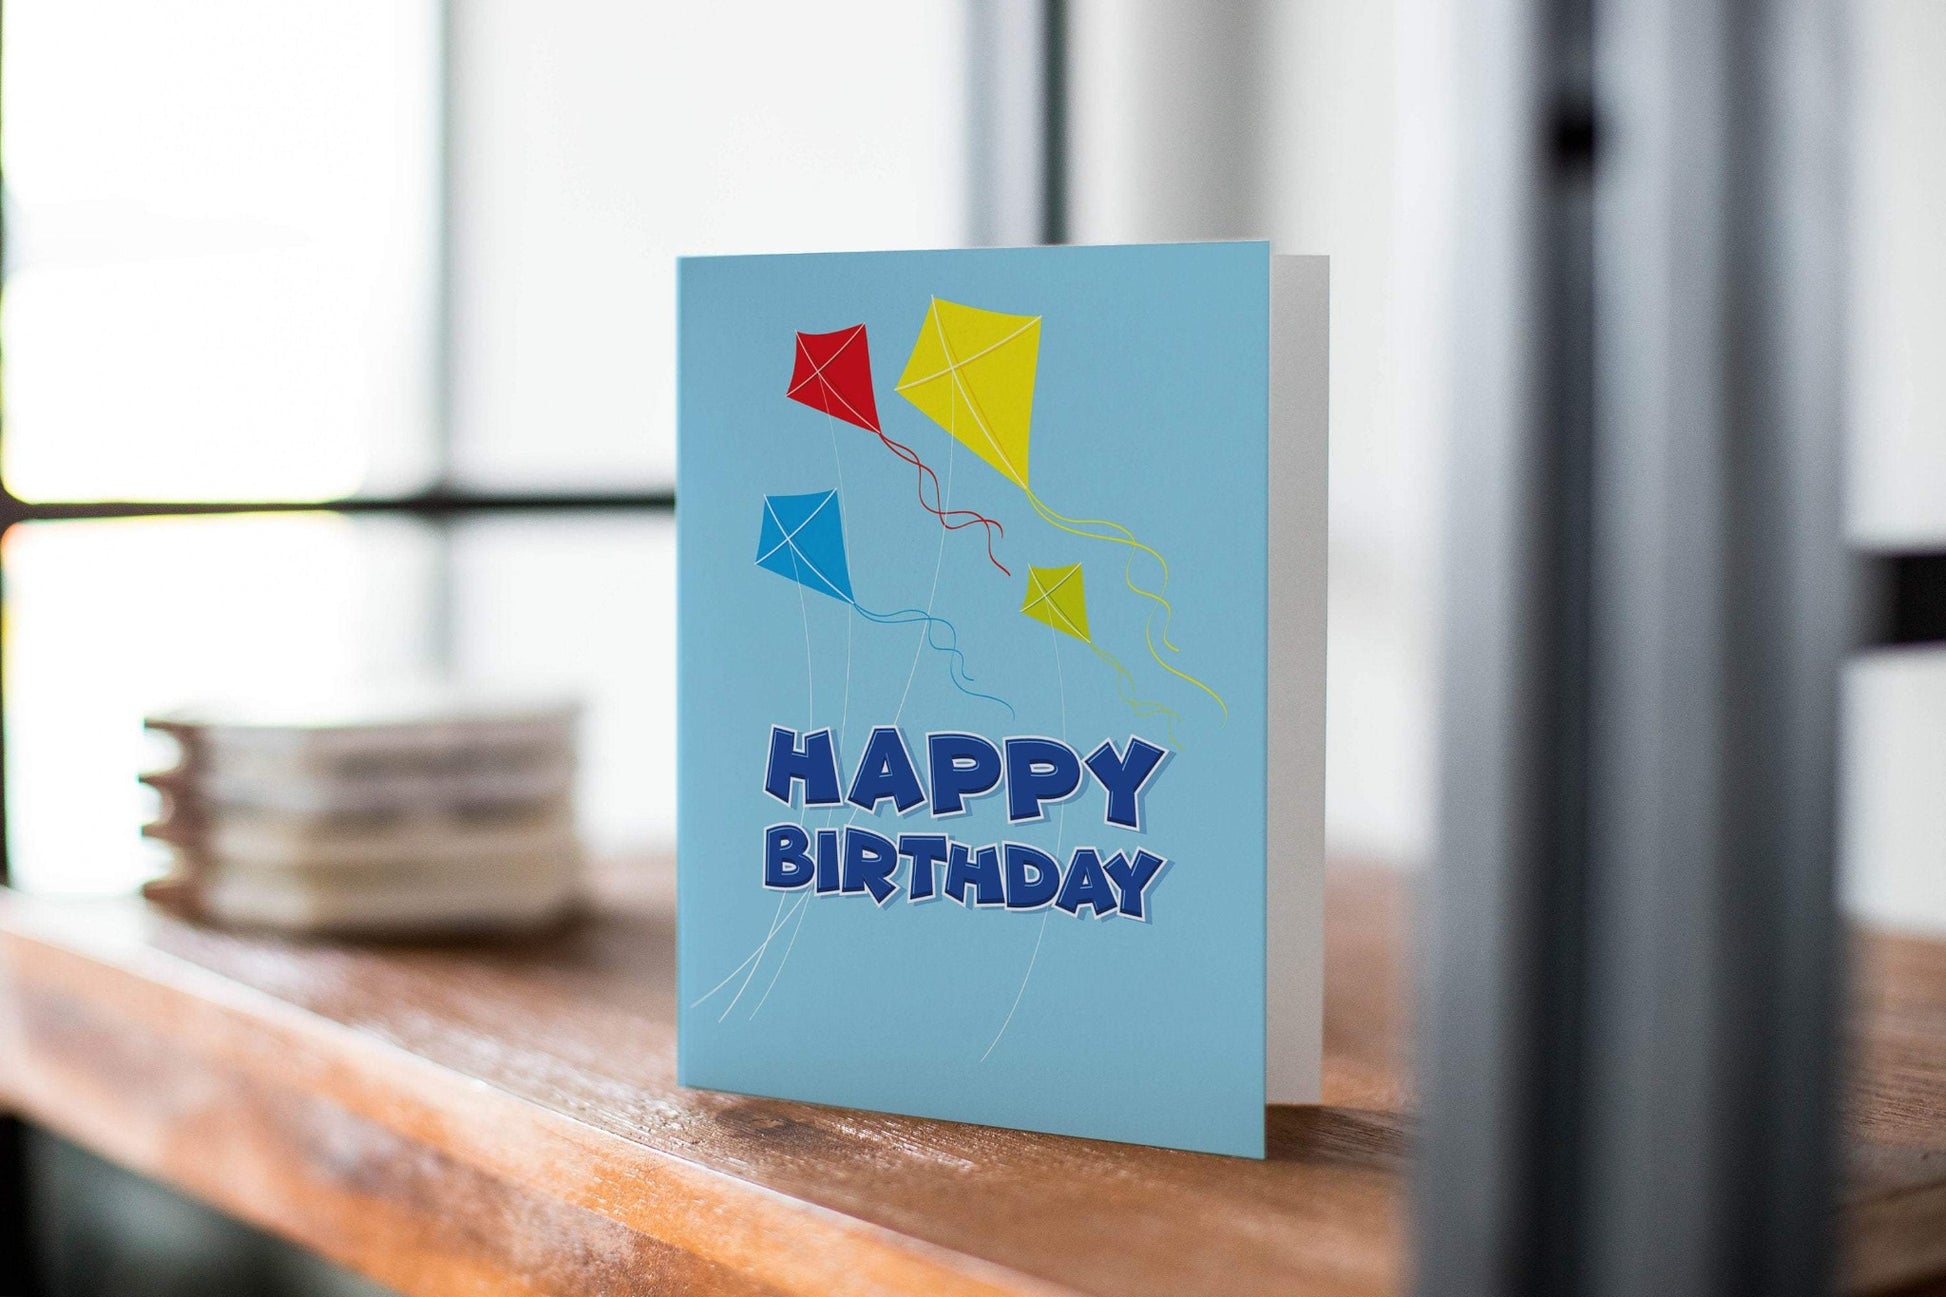 Kite Birthday Celebration - Kids Birthday Greeting Card.